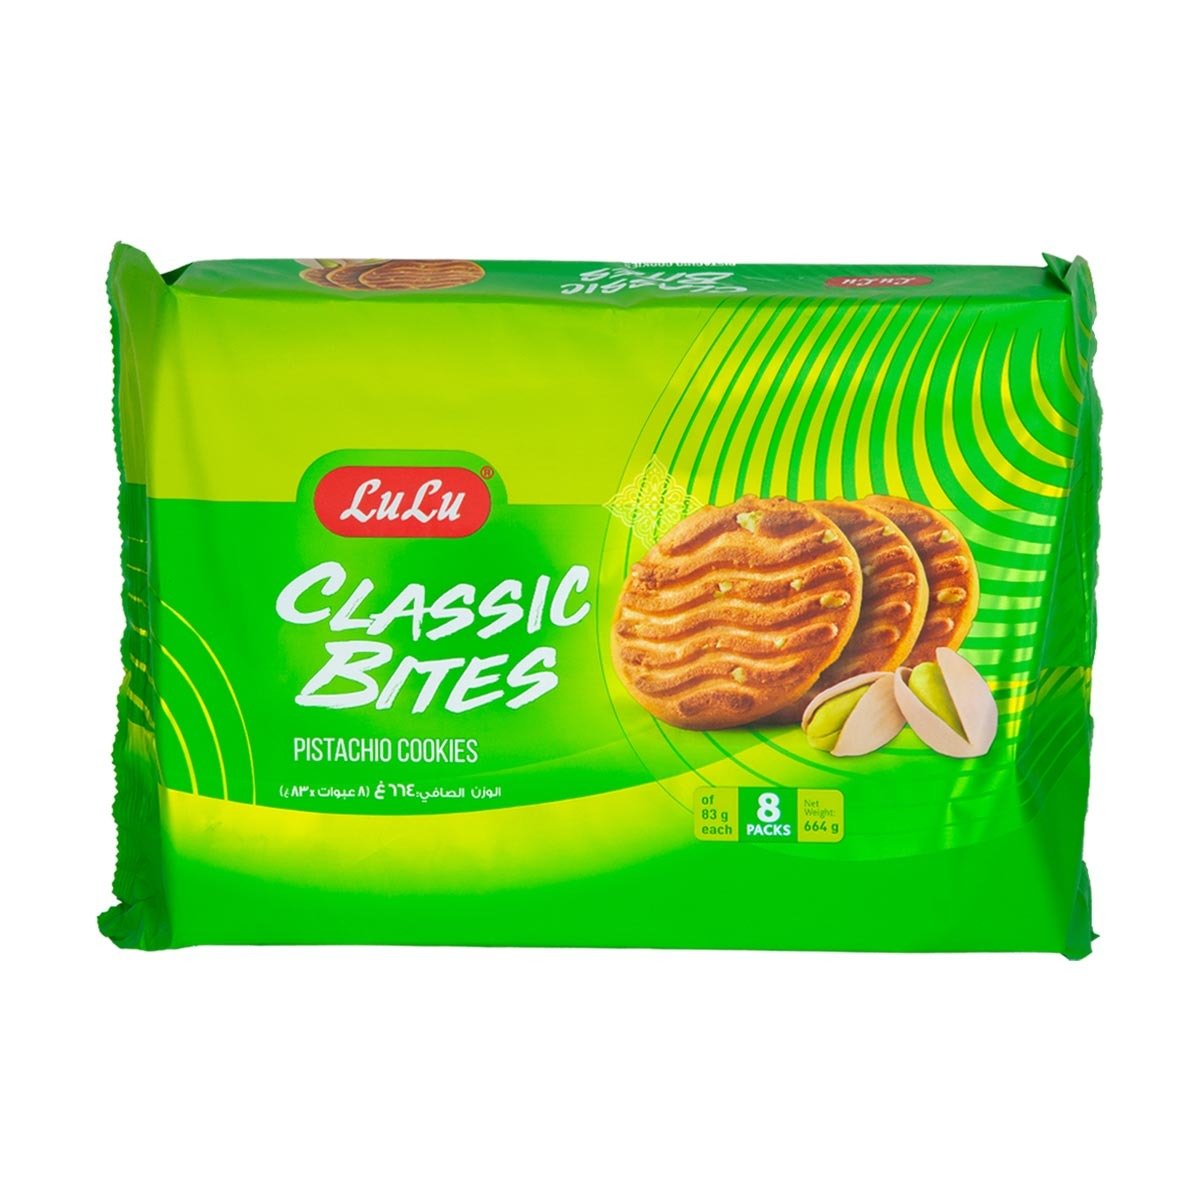 LuLu Classic Bites Pistachio Cookies 8 x 83 g